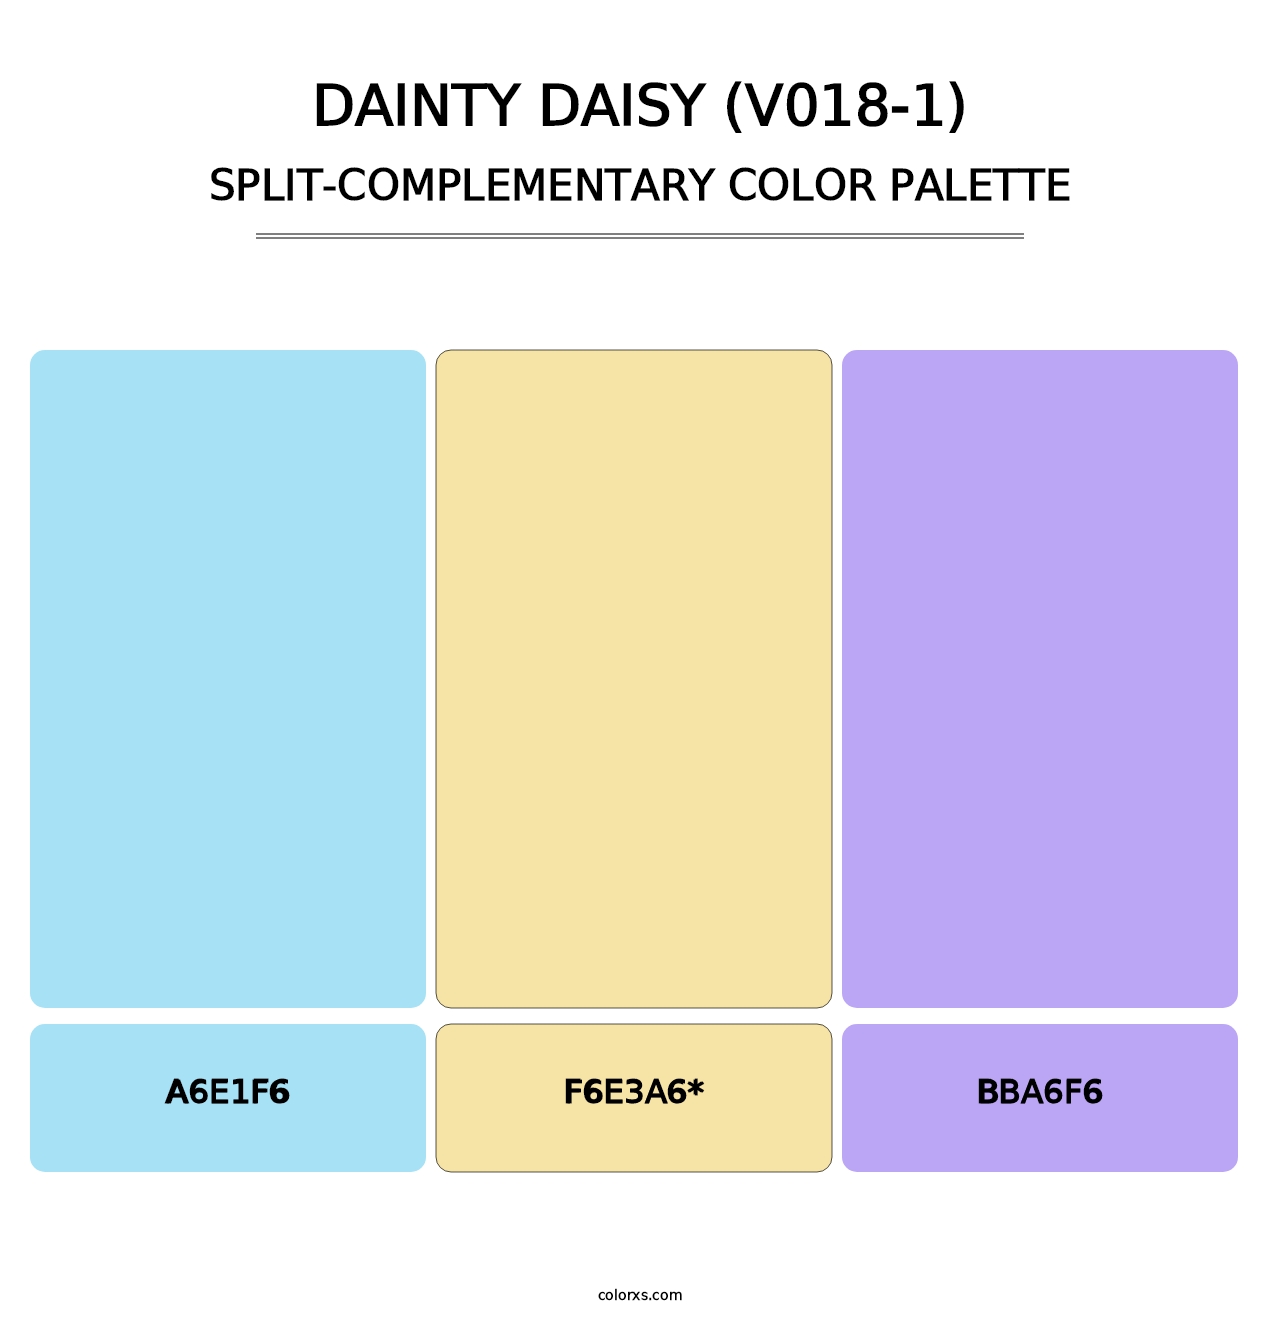 Dainty Daisy (V018-1) - Split-Complementary Color Palette